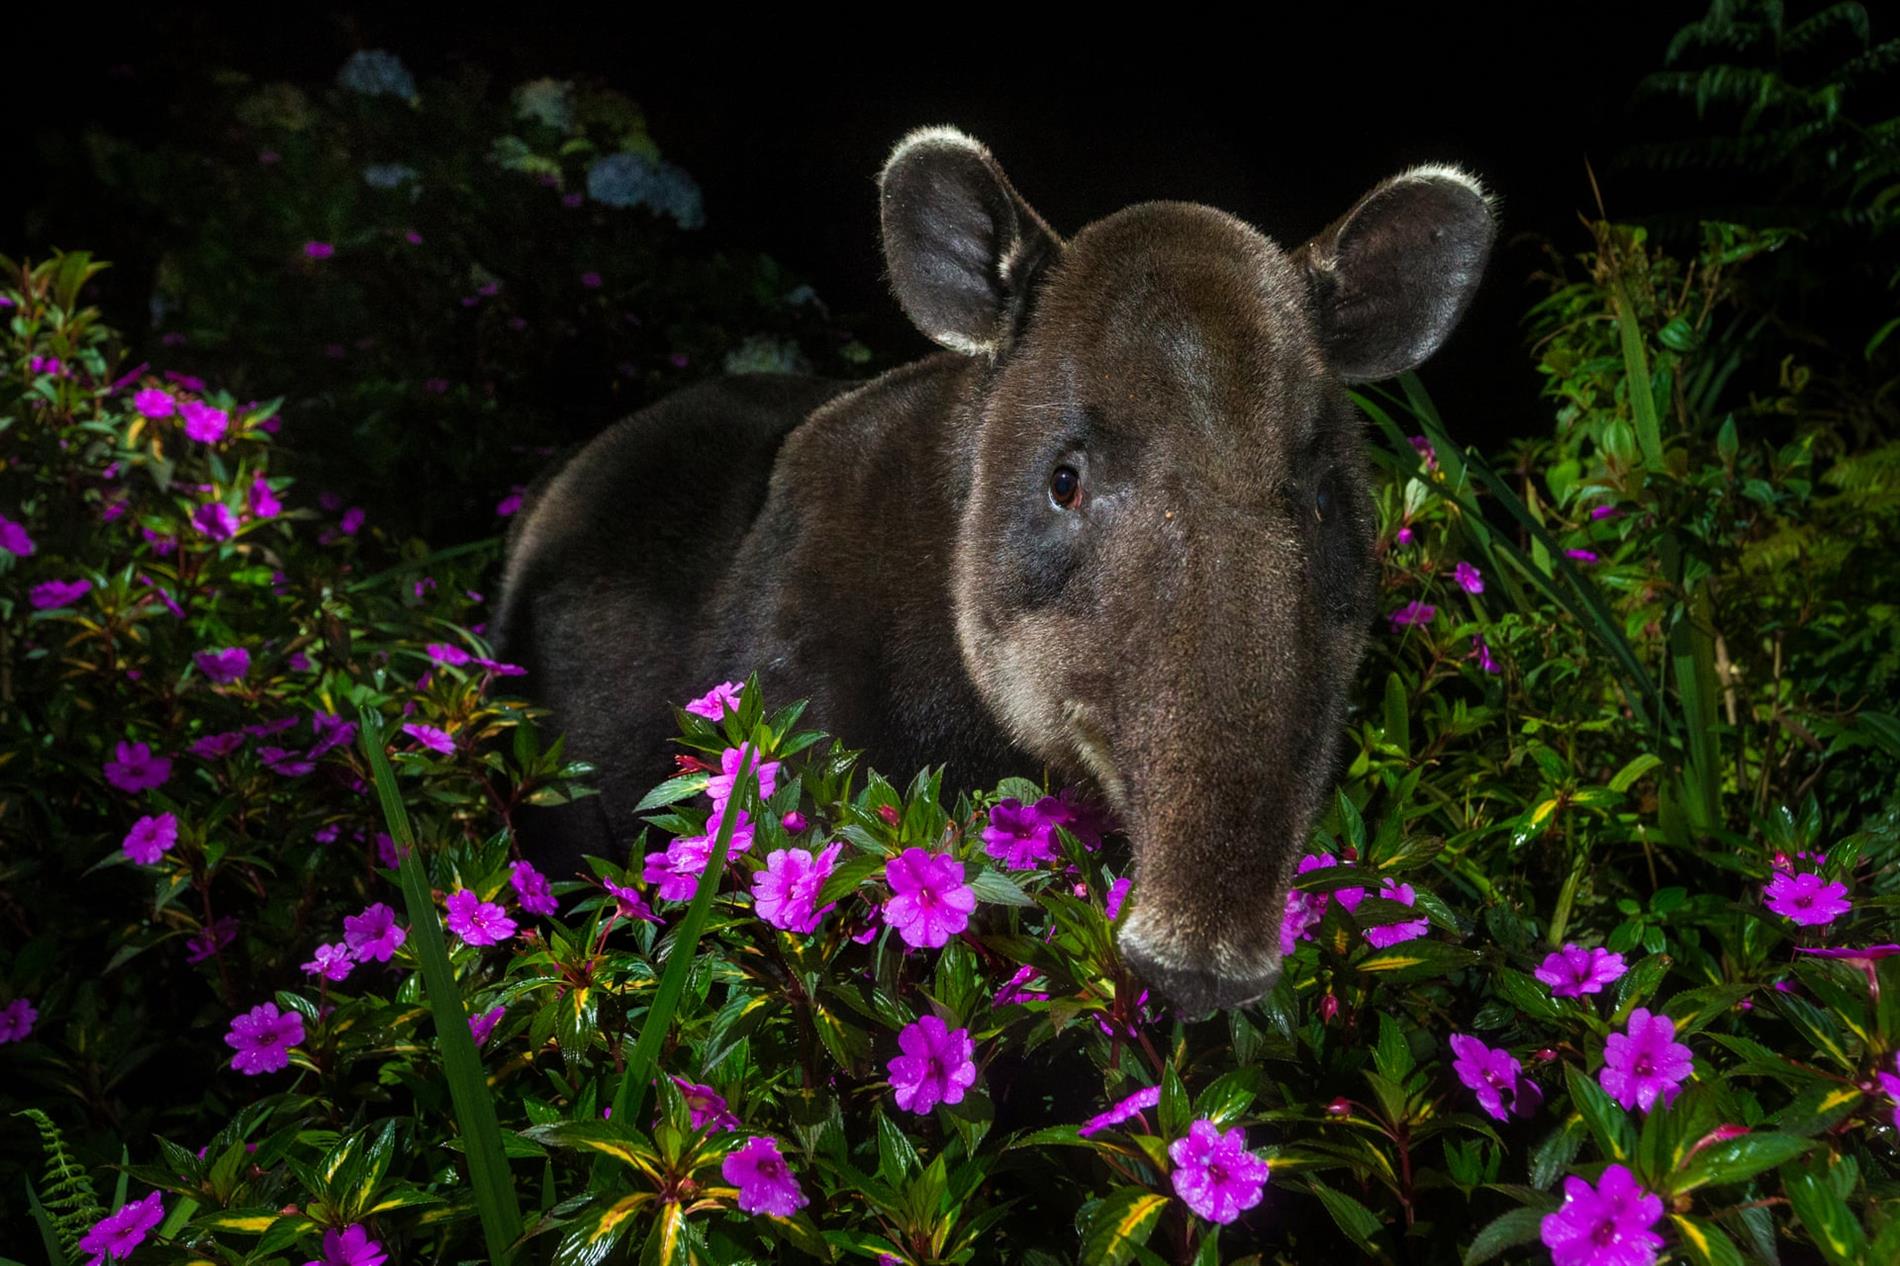 Wildlife Photographer of the Year: Σπάνιες φωτογραφίες άγριων ζώων που κόβουν την ανάσα - Οι 25 φιναλίστ